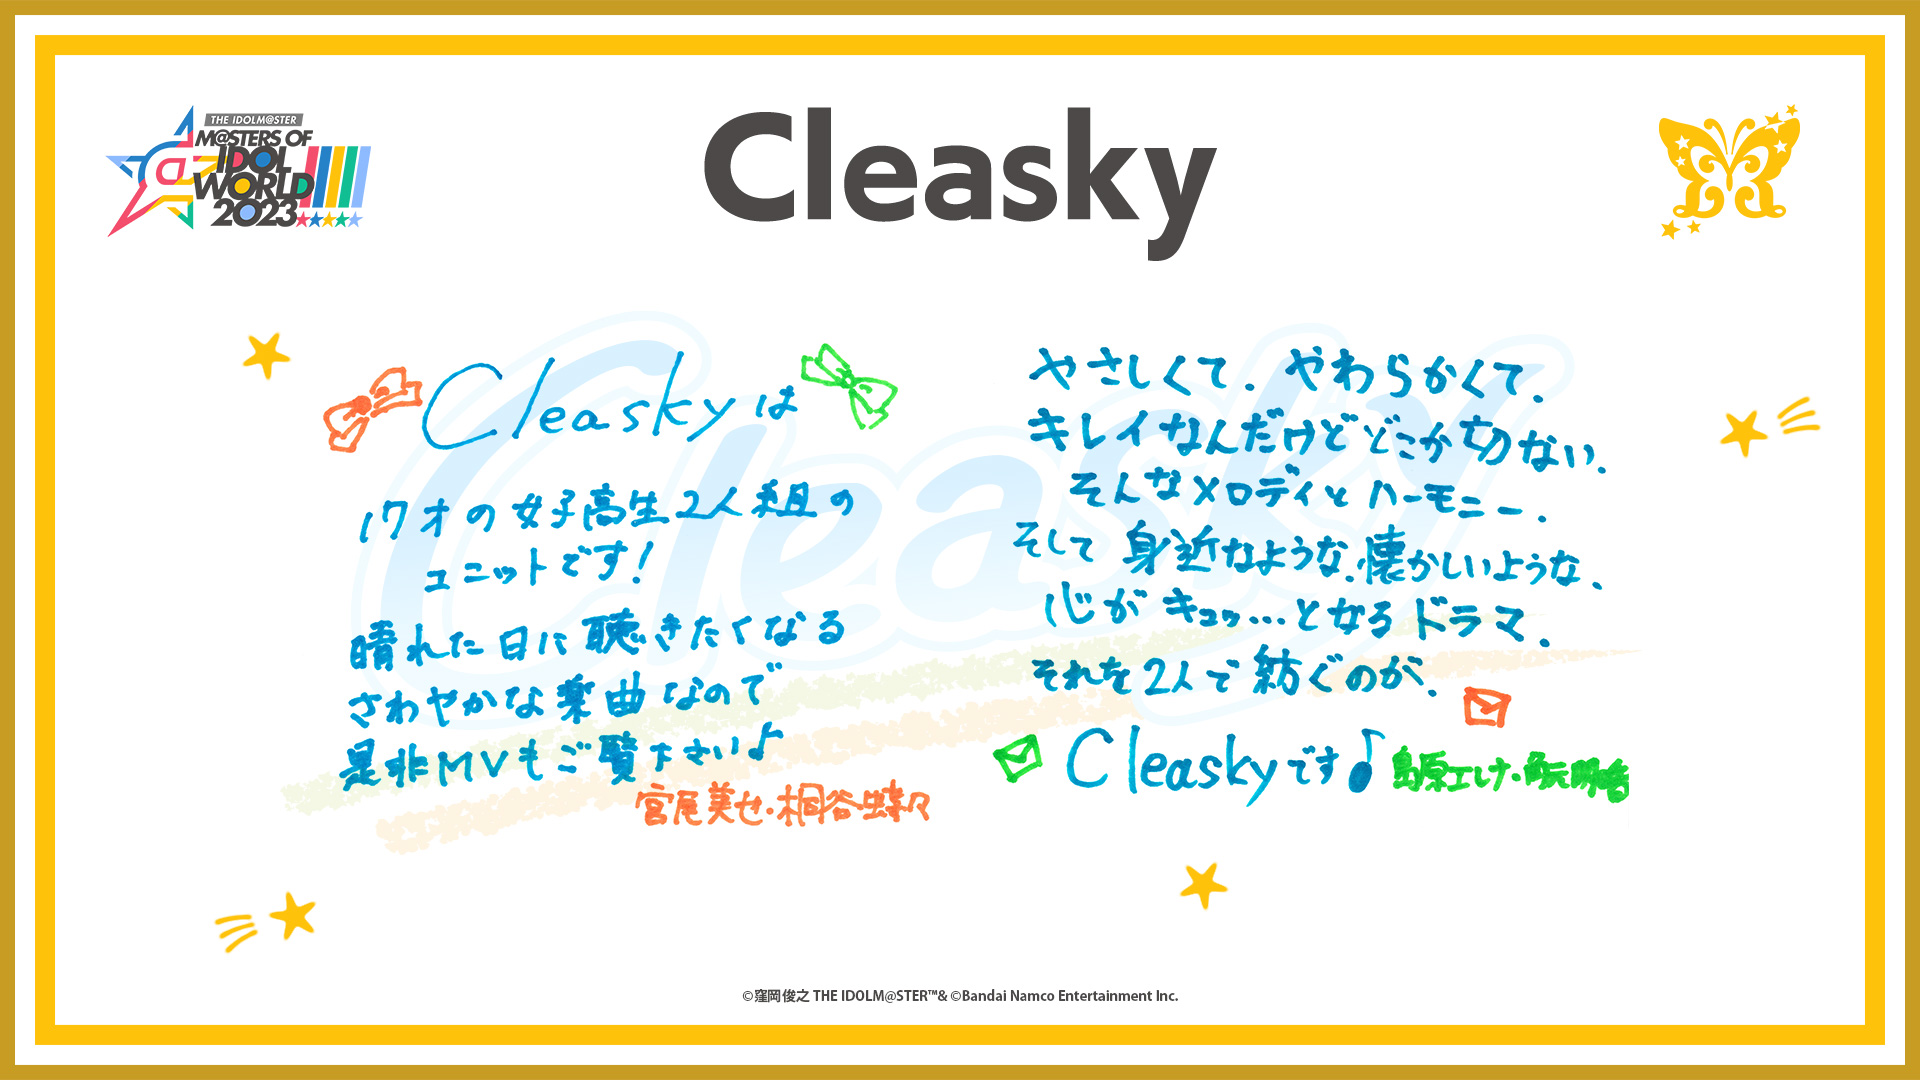 Cleasky